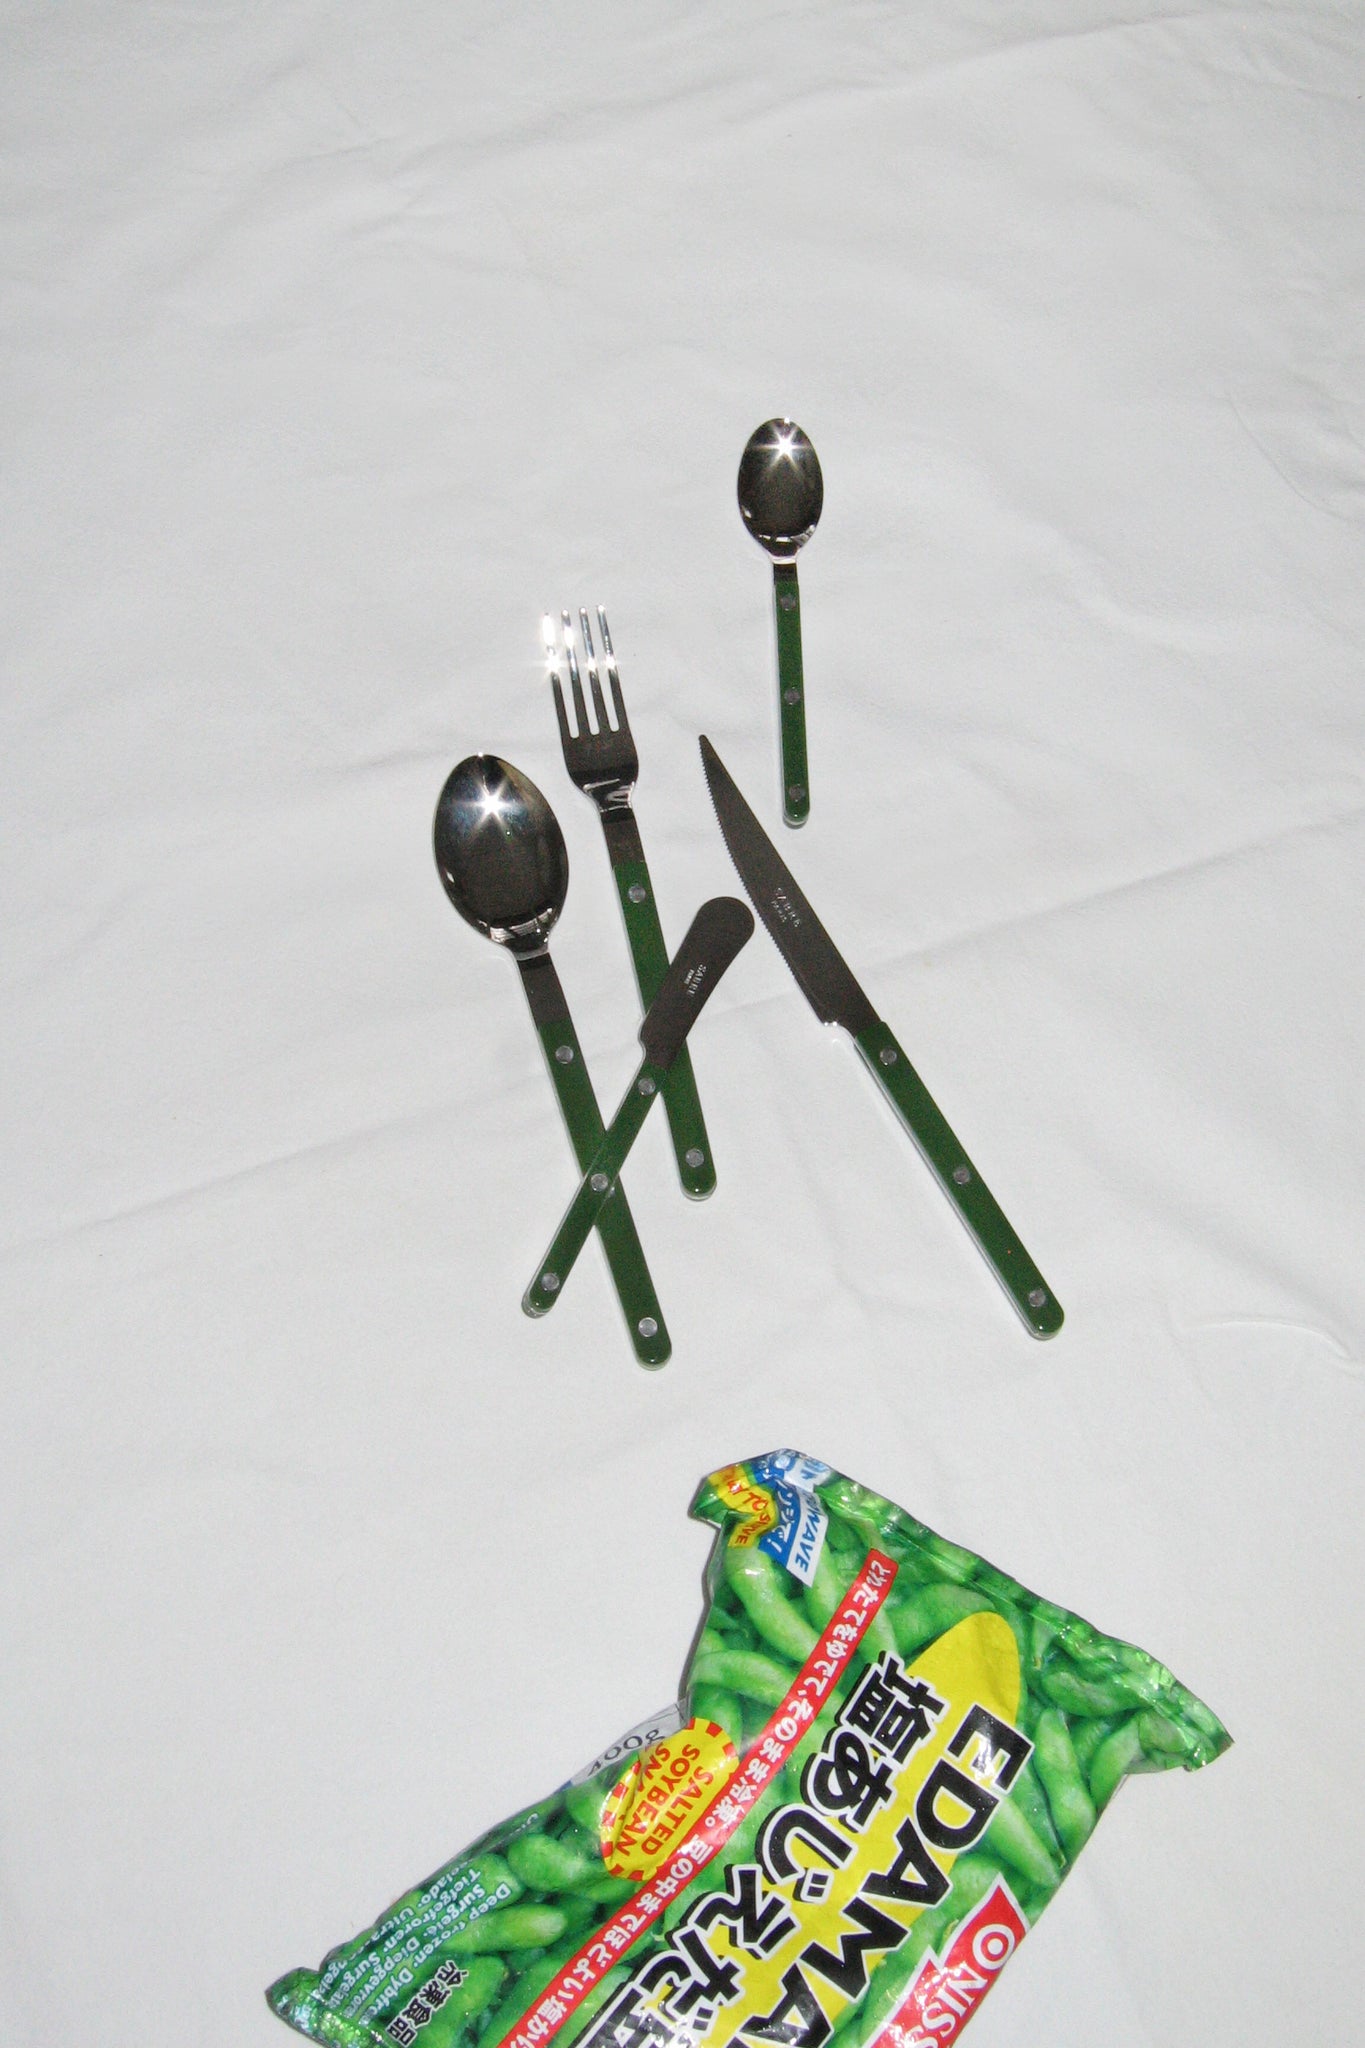 Bistrot cutlery green-Sabre Paris-KIOSK48TH